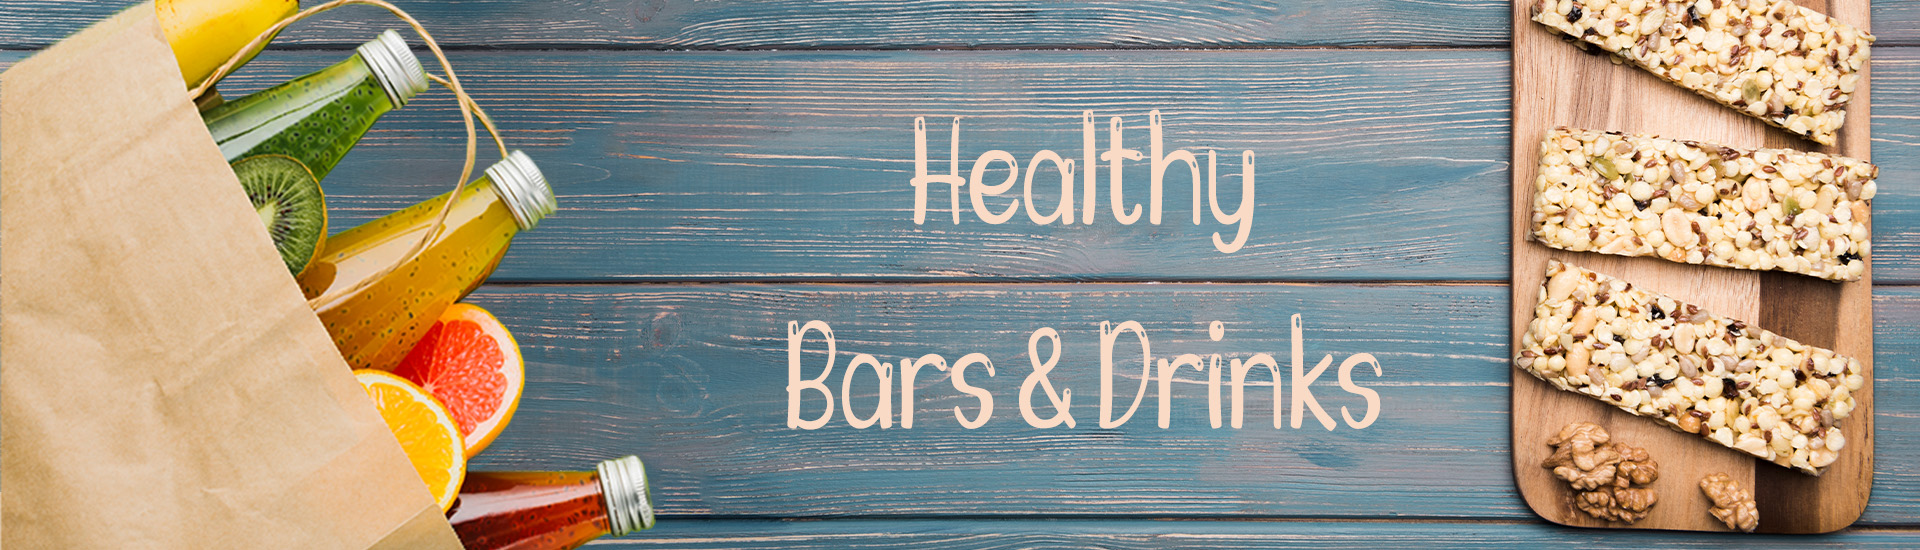 Health Bars & Drinks